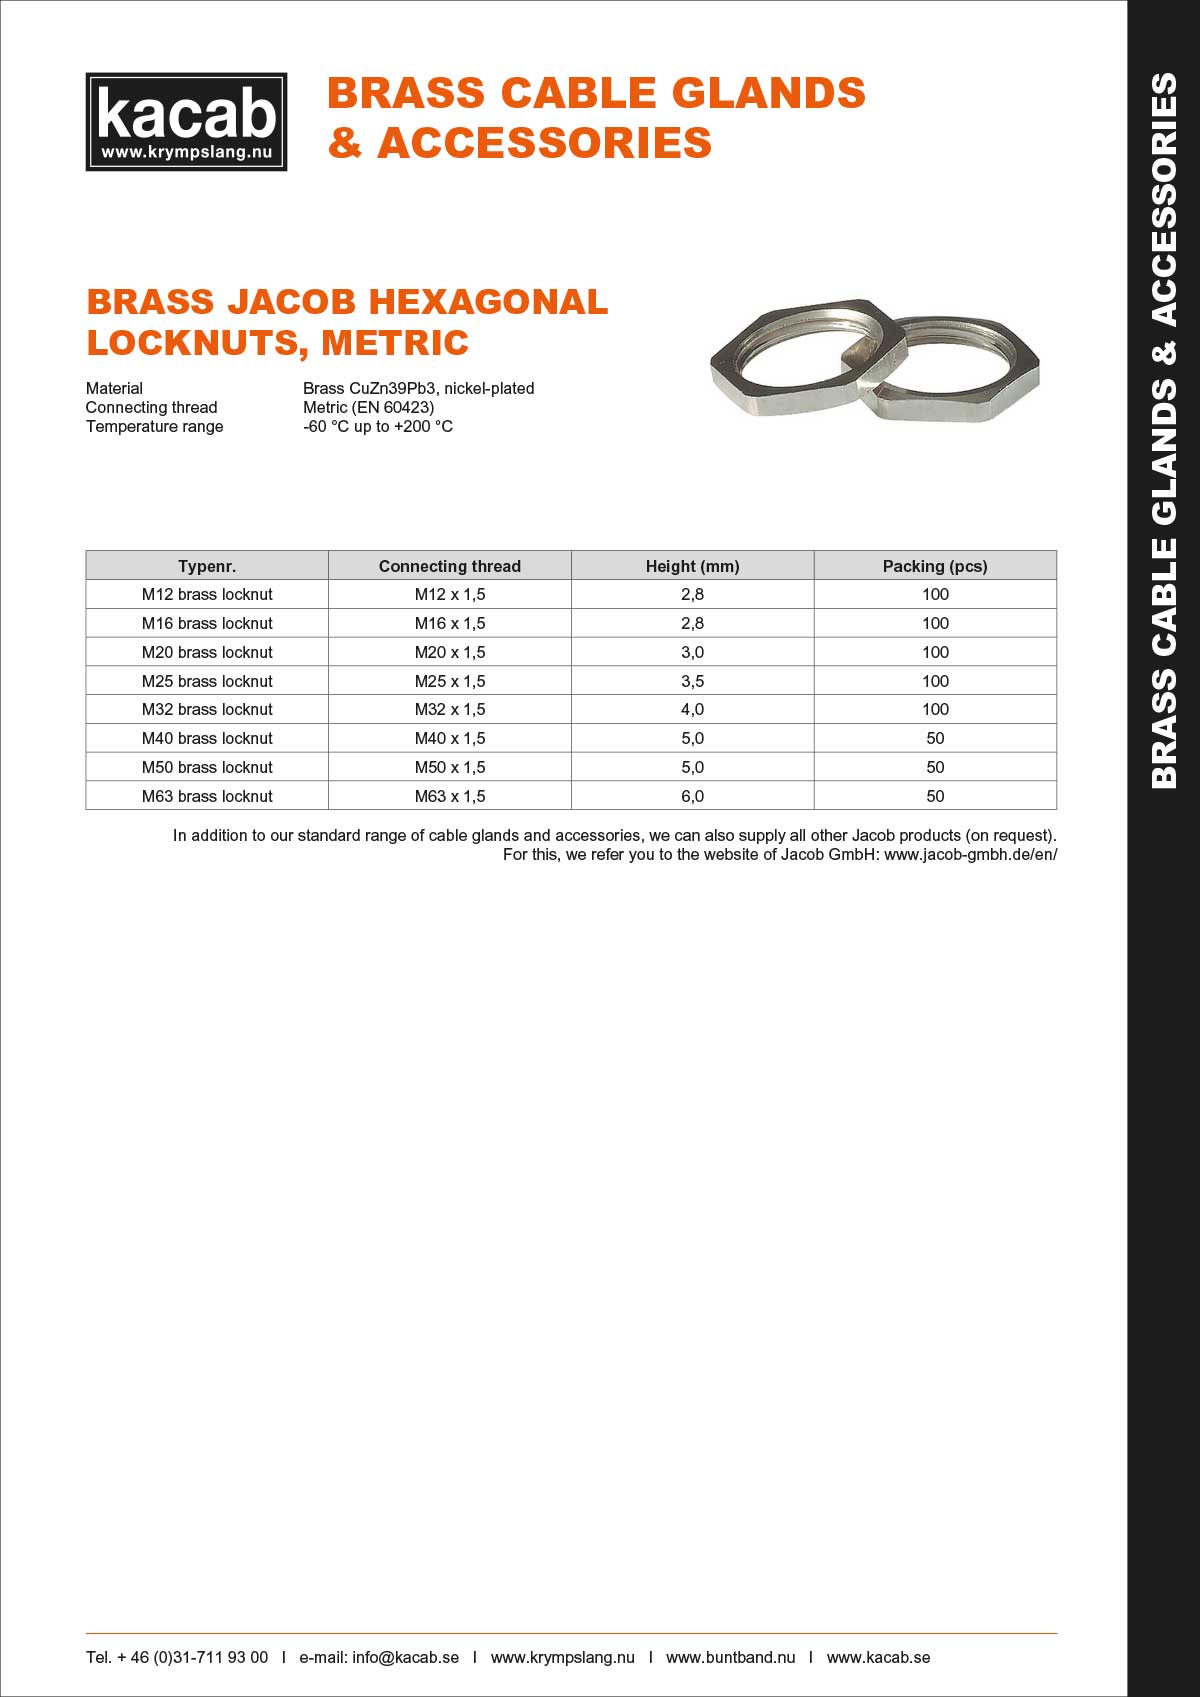 Brass Jacob hexagonal locknuts, metric